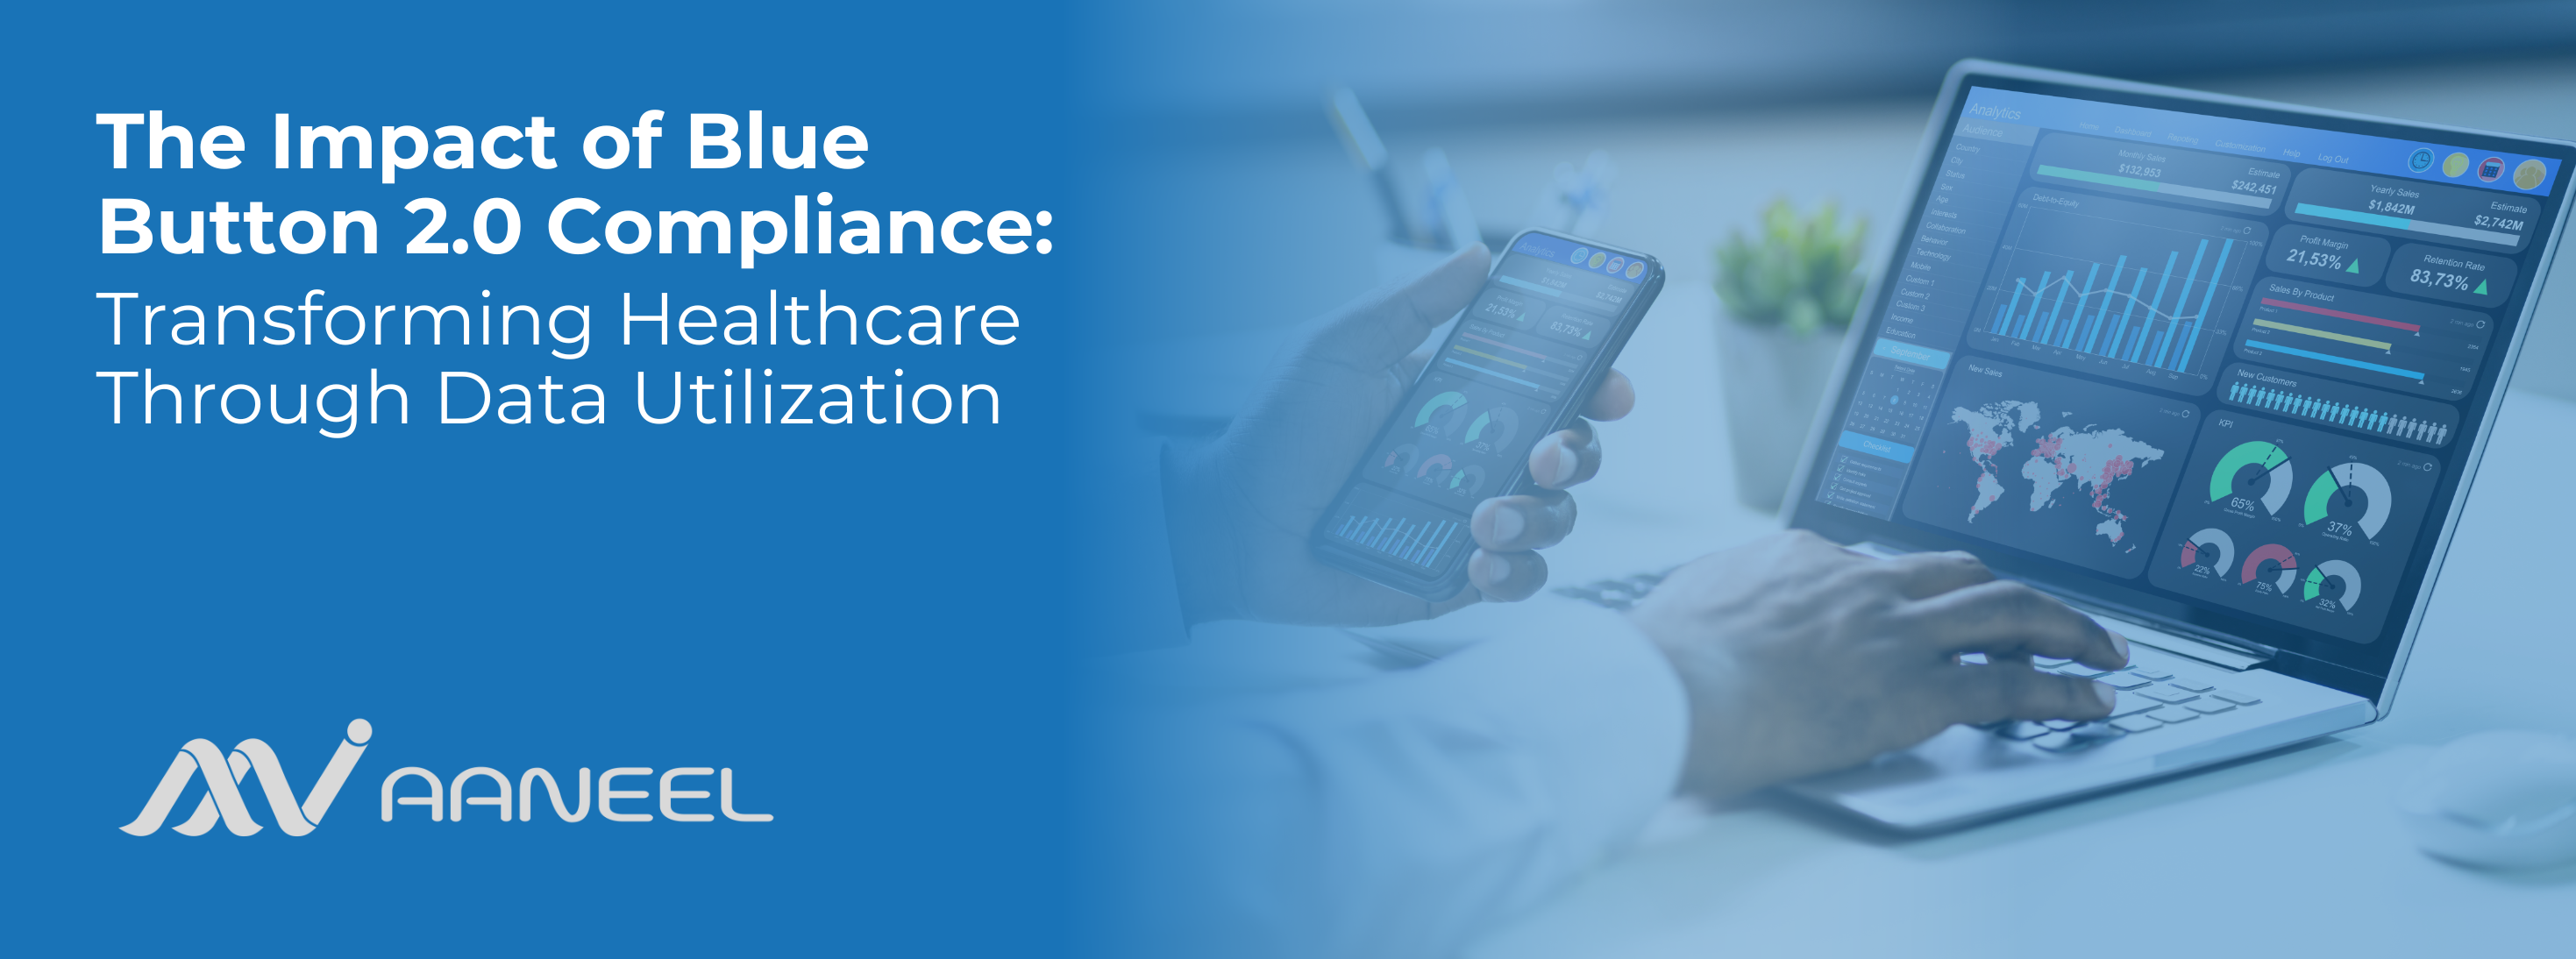 The Impact of Blue Button 2.0 Compliance: Transforming Healthcare Through Data Utilization Transforming Healthcare Through Data Utilization